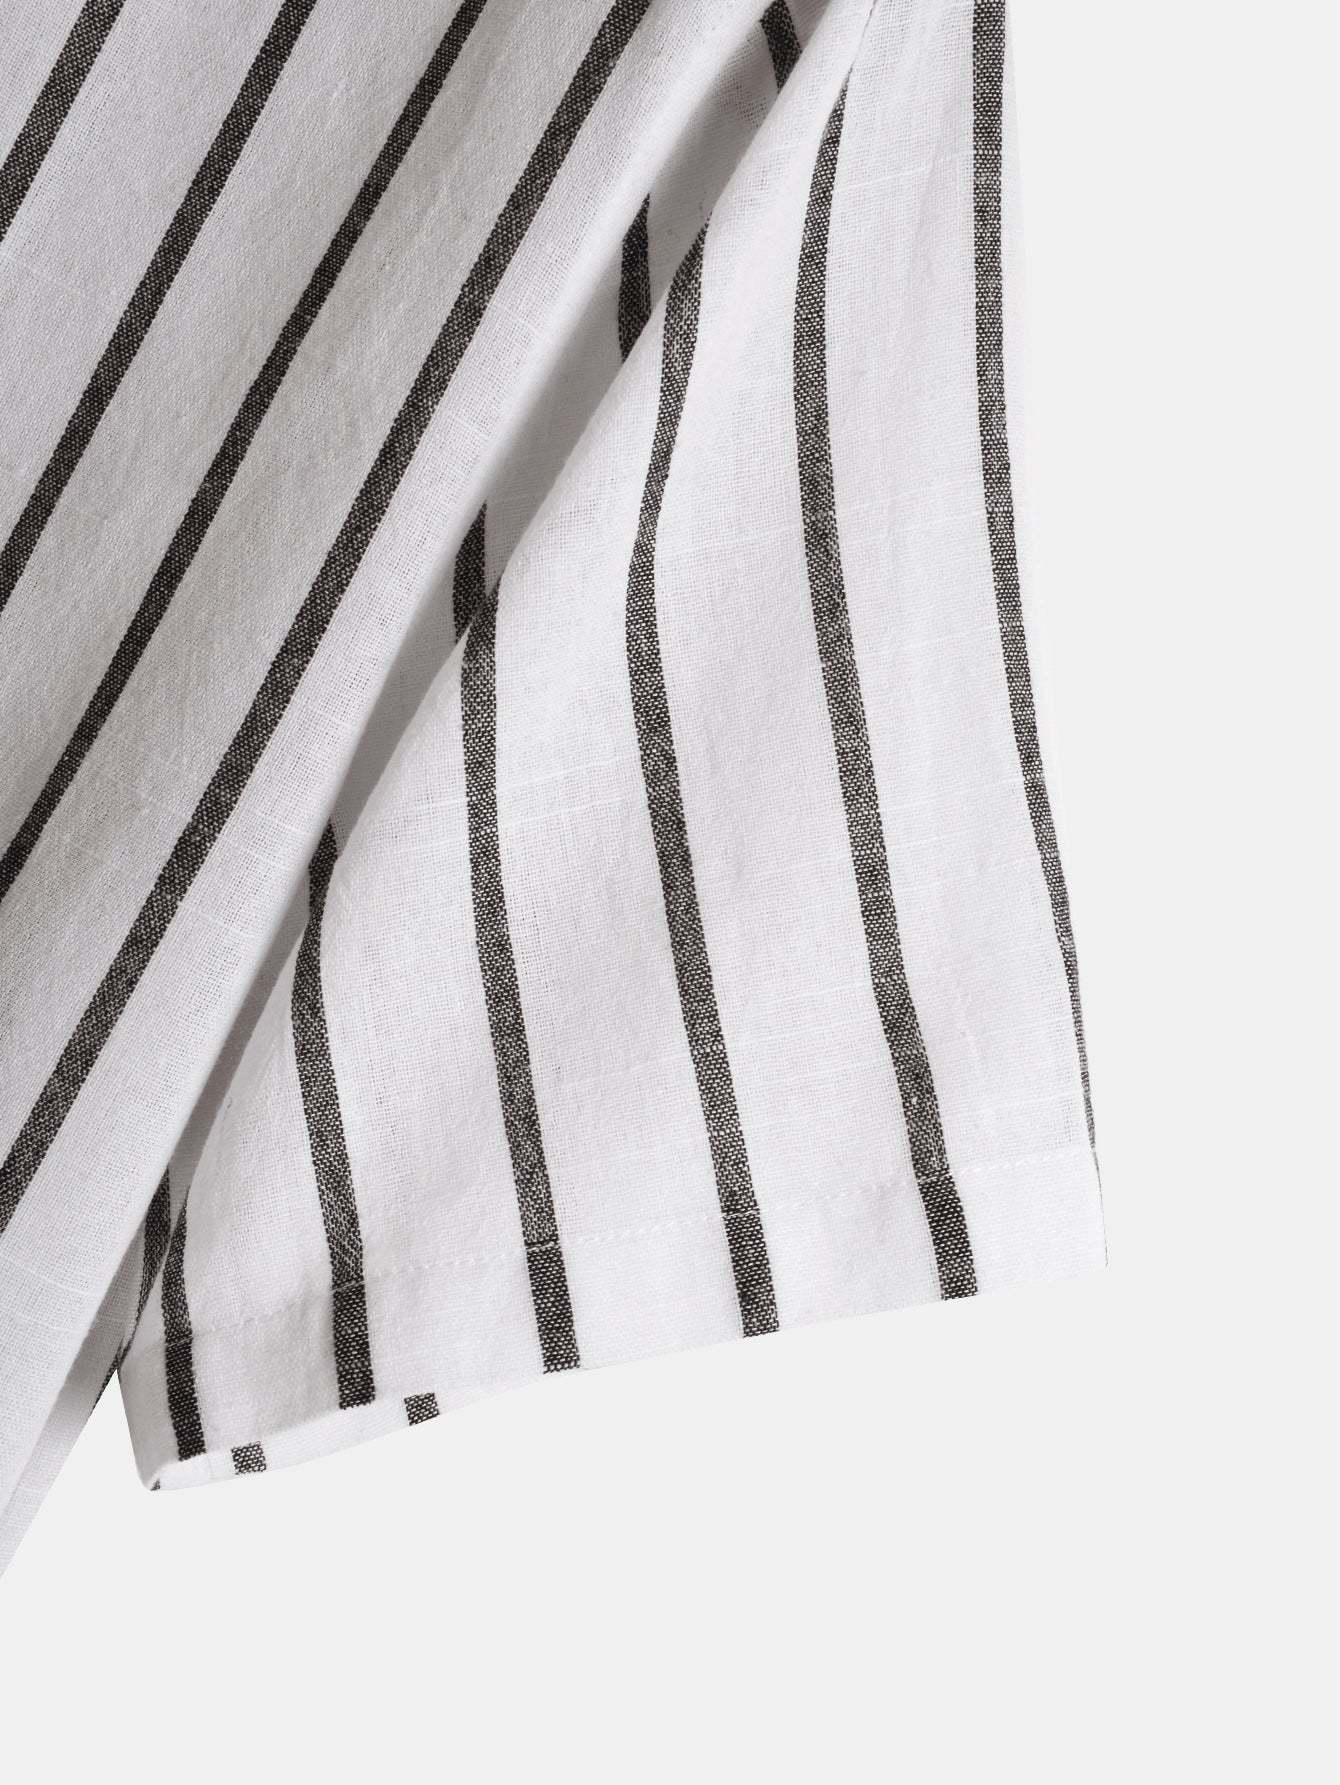 Classic Stripes Short Sleeve Henley Shirts